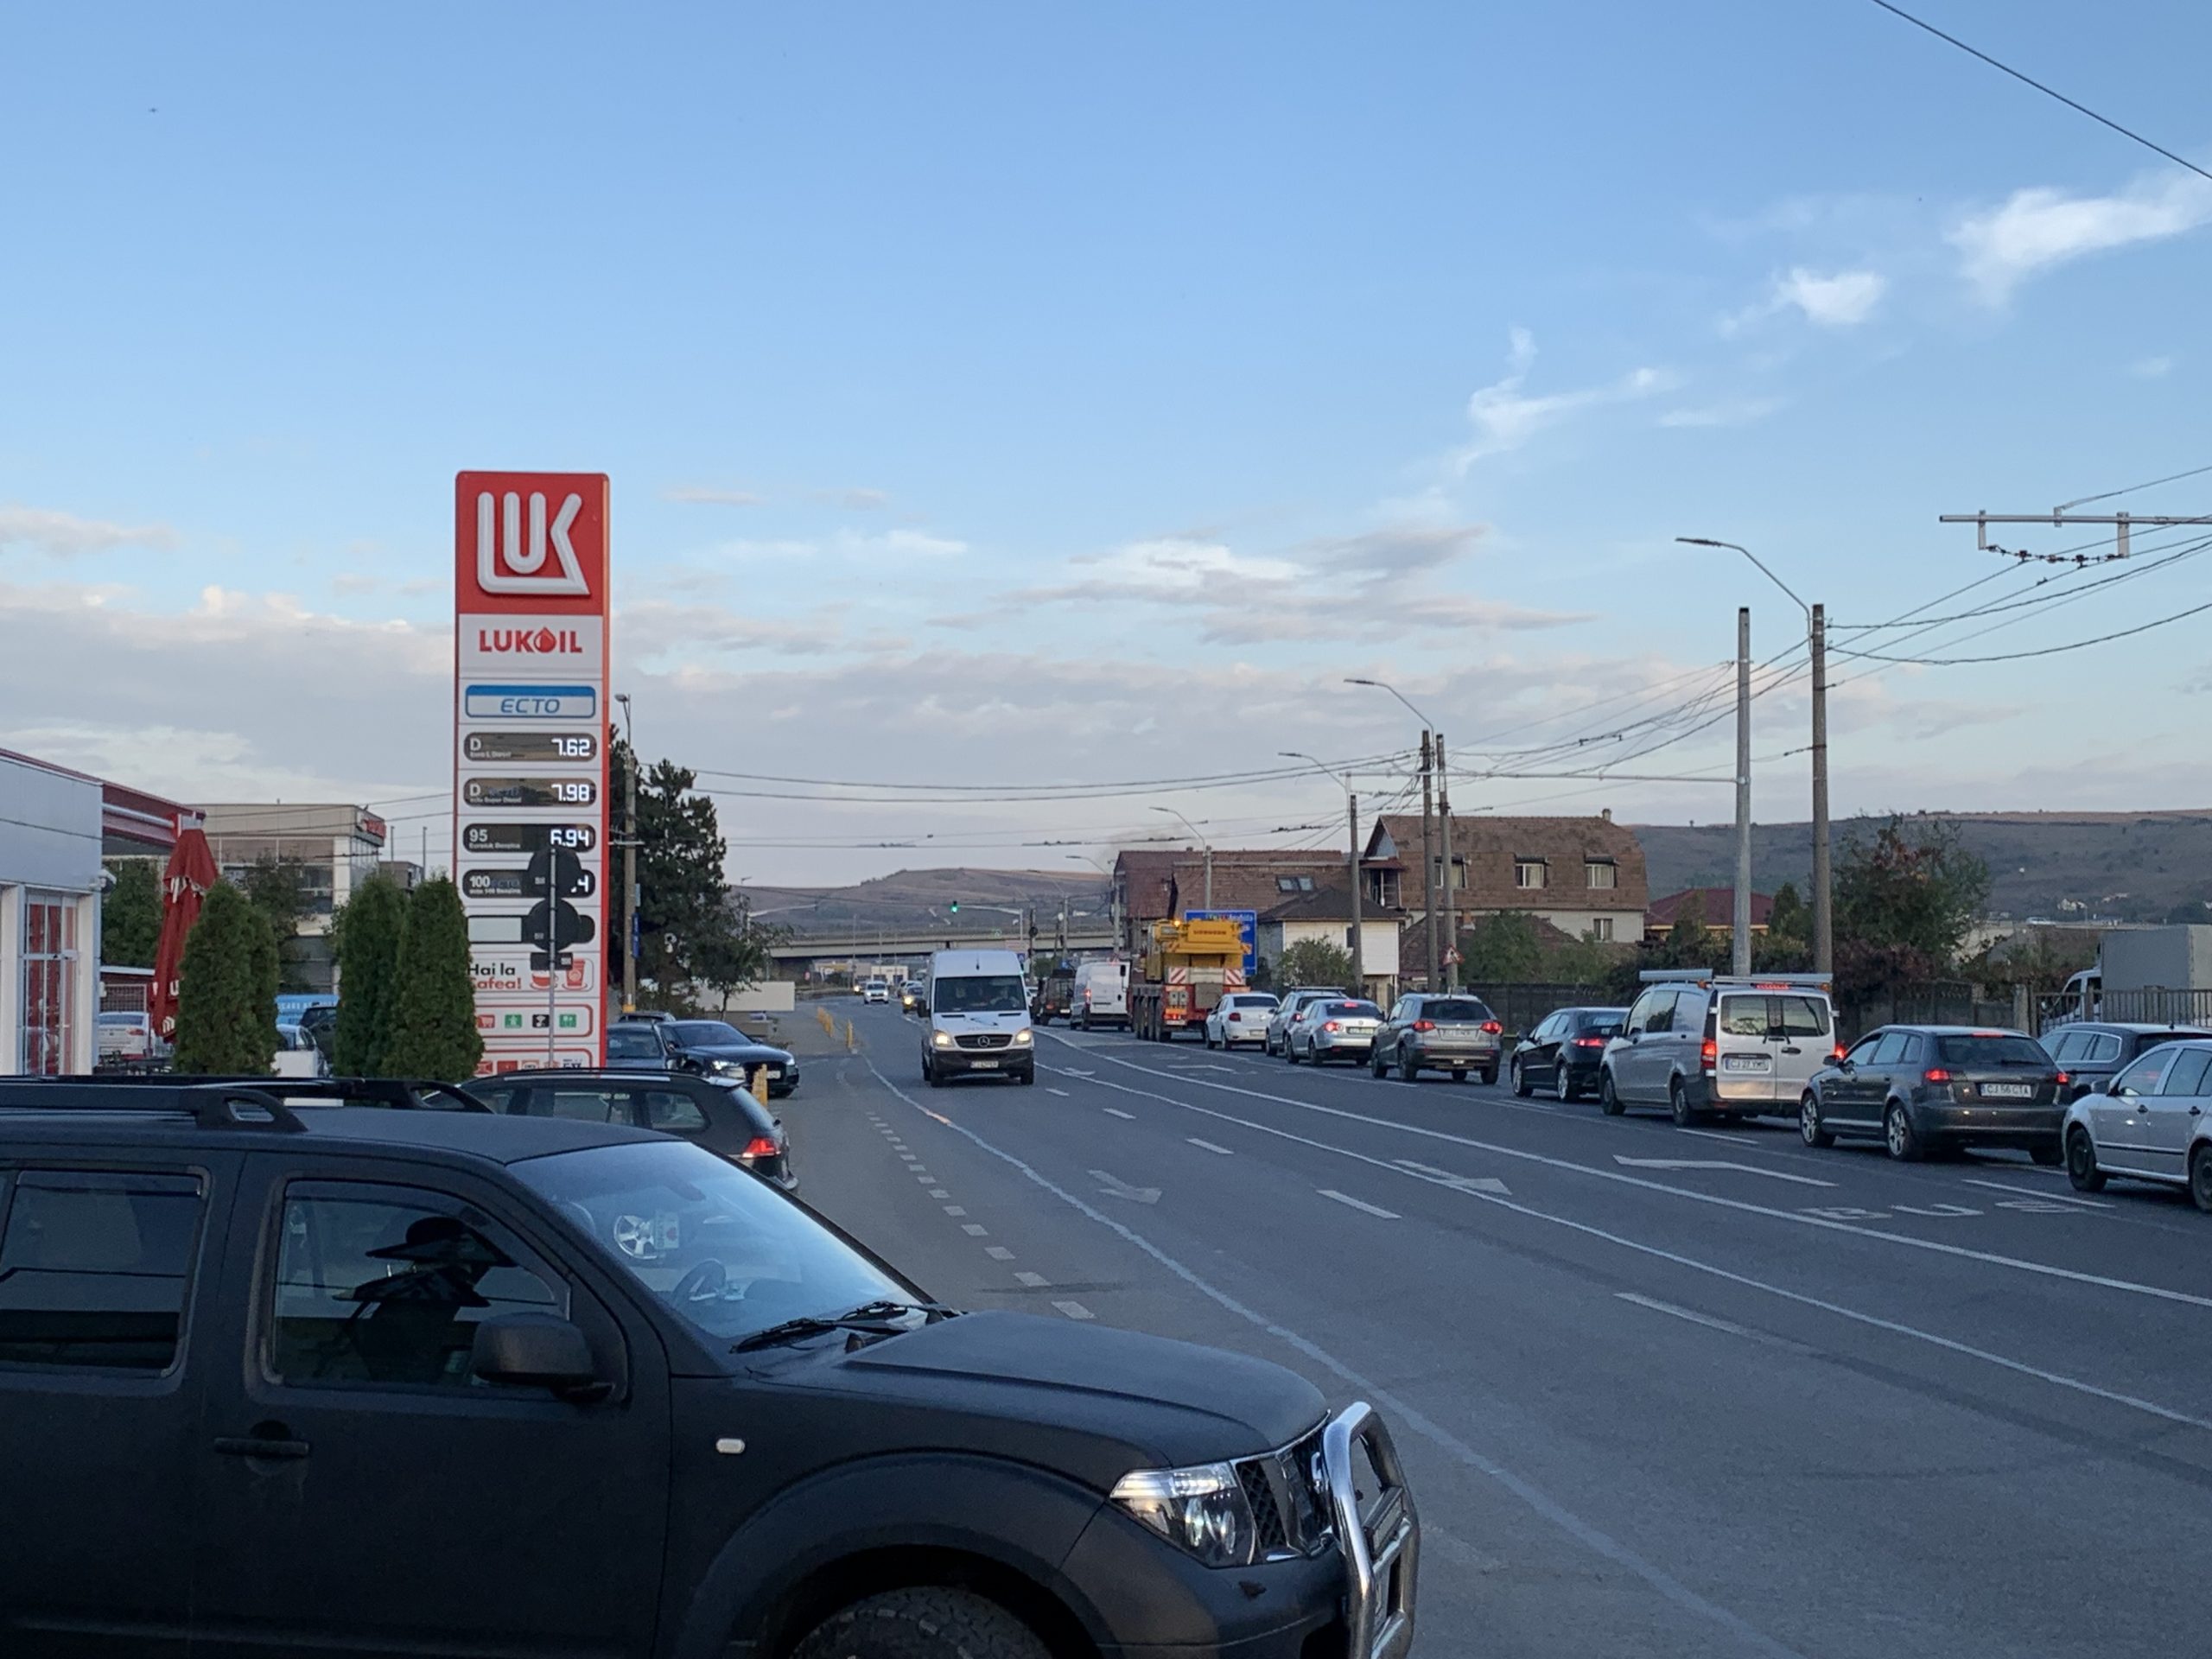 Haos la ieșire din Cluj-Napoca spre Apahida! Coada in trafic are kilometri buni - VIDEO și FOTO